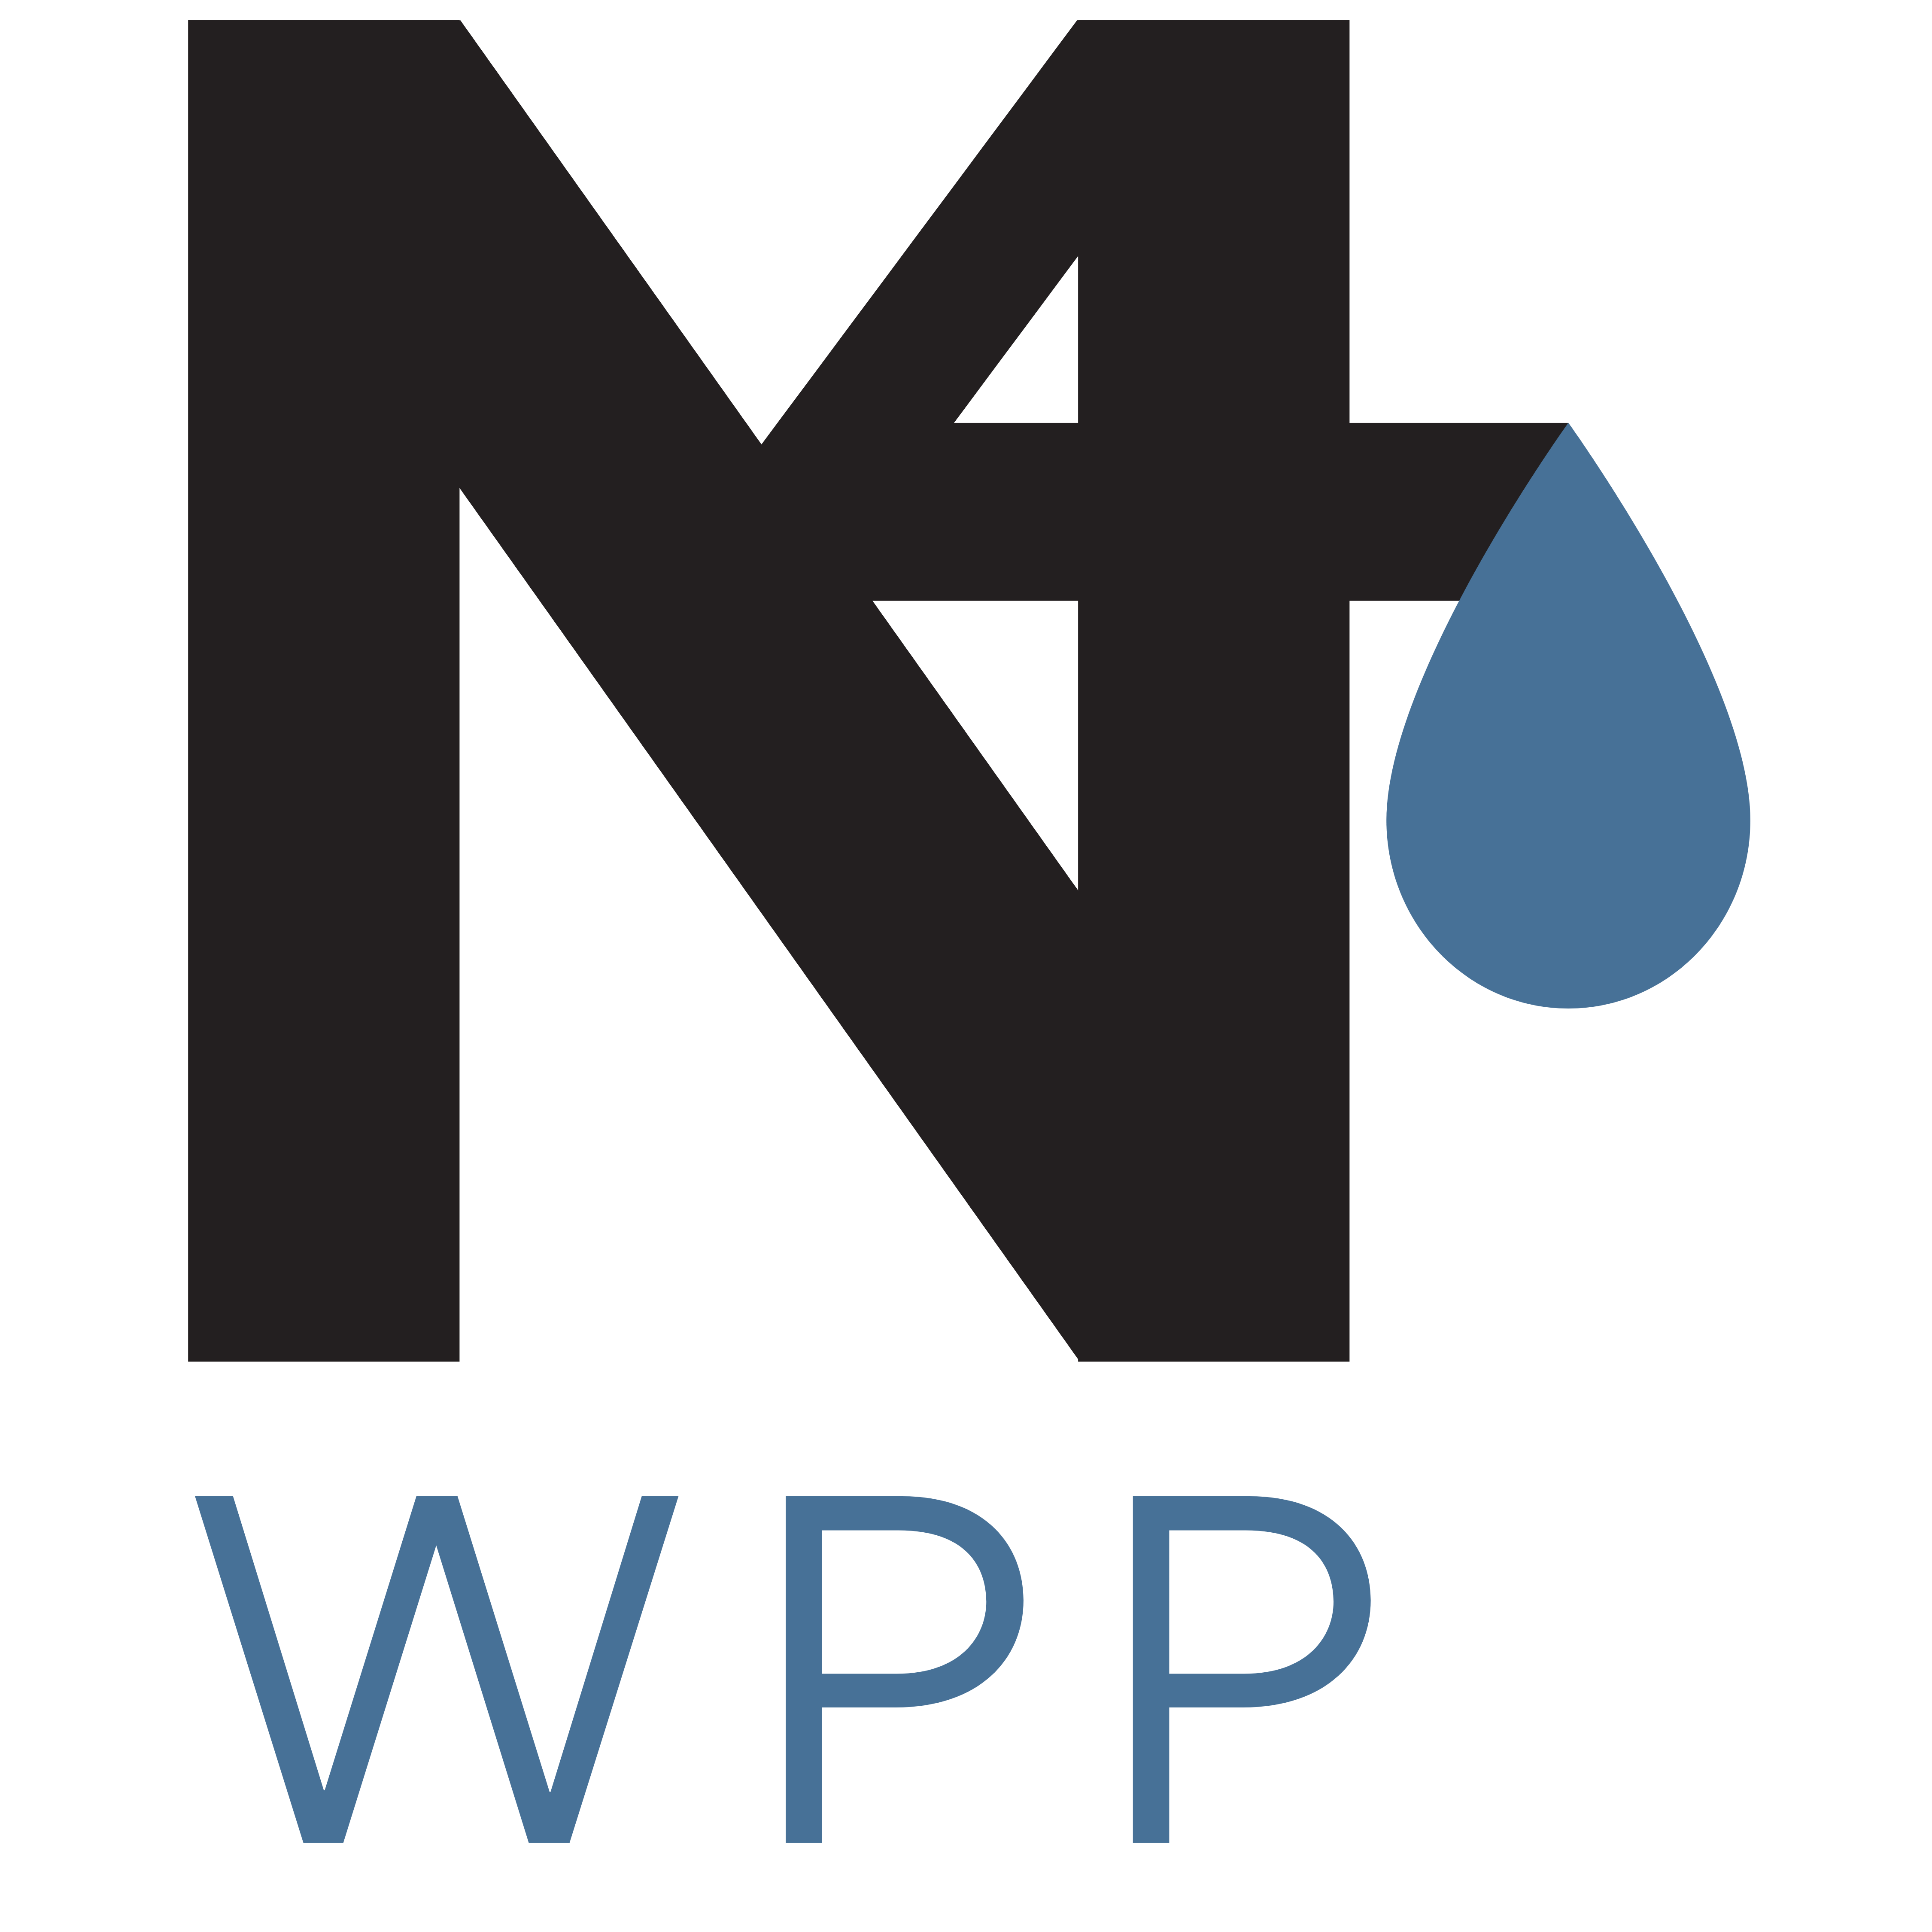 N4WPP Logo